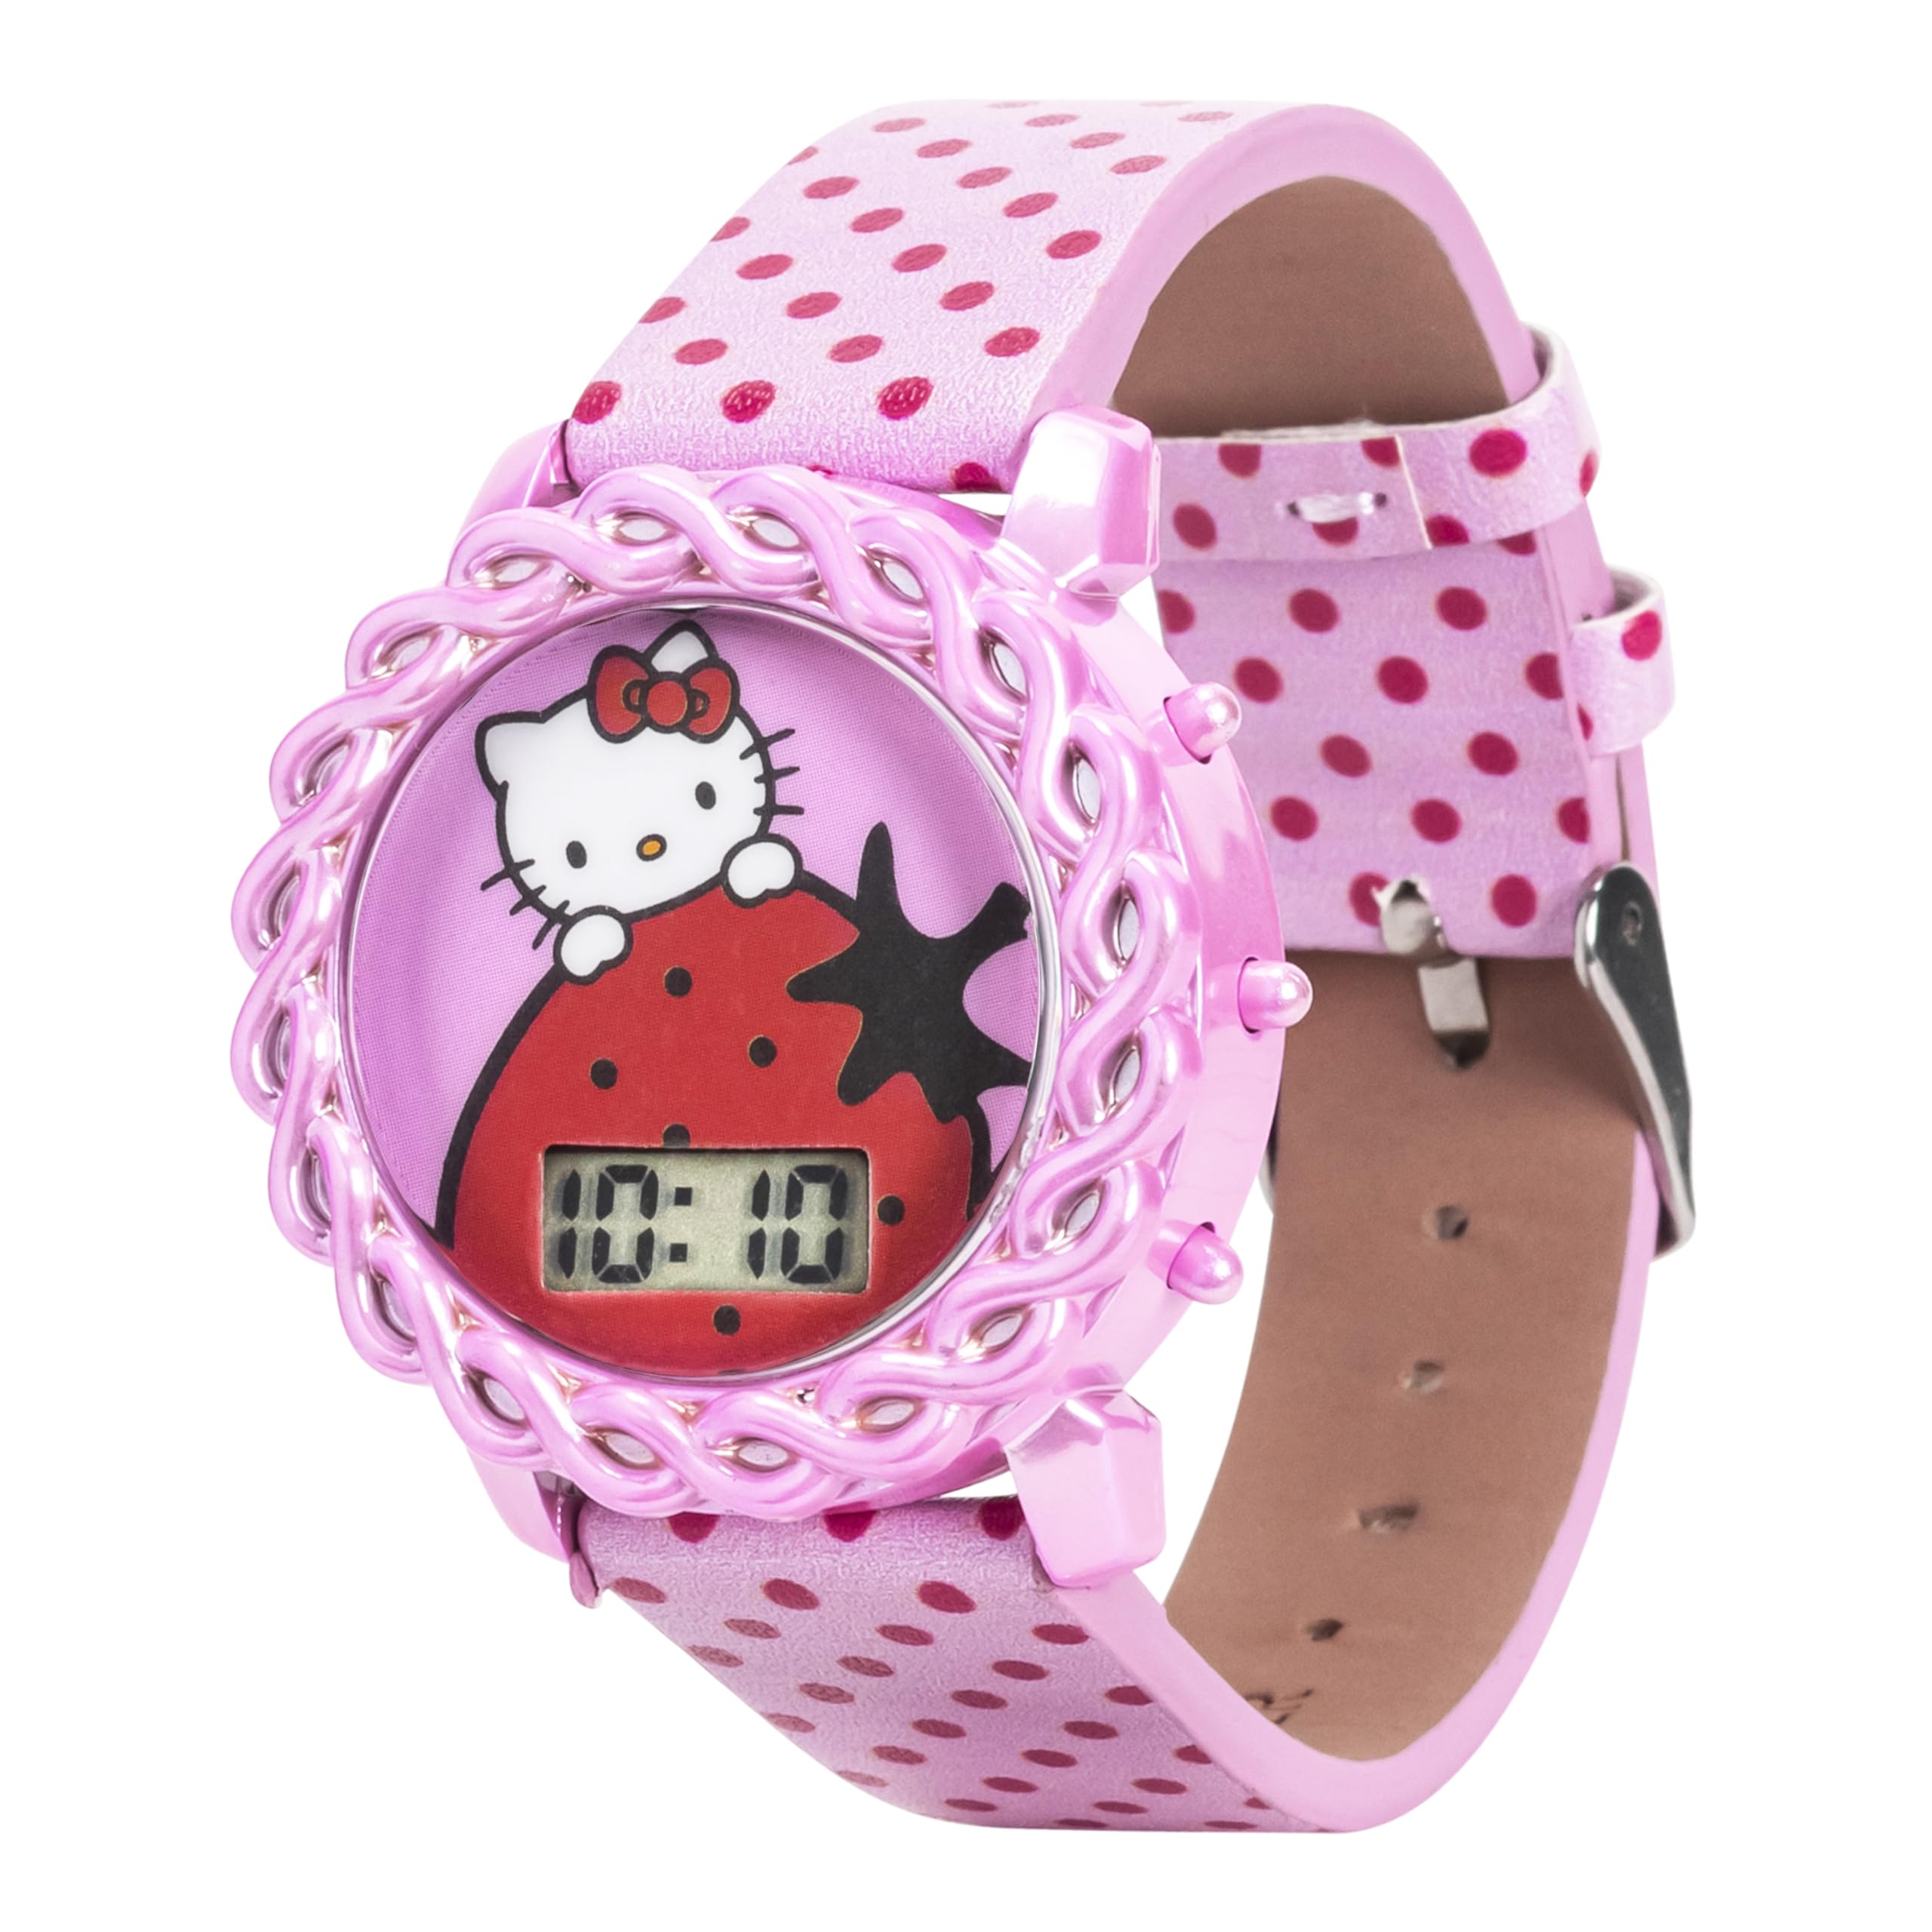 Accutime Hello Kitty Digital LCD Quartz Light Up Kids Pink Watch for Girls with Polka Dot Print Band Strap Model HK4190AZ